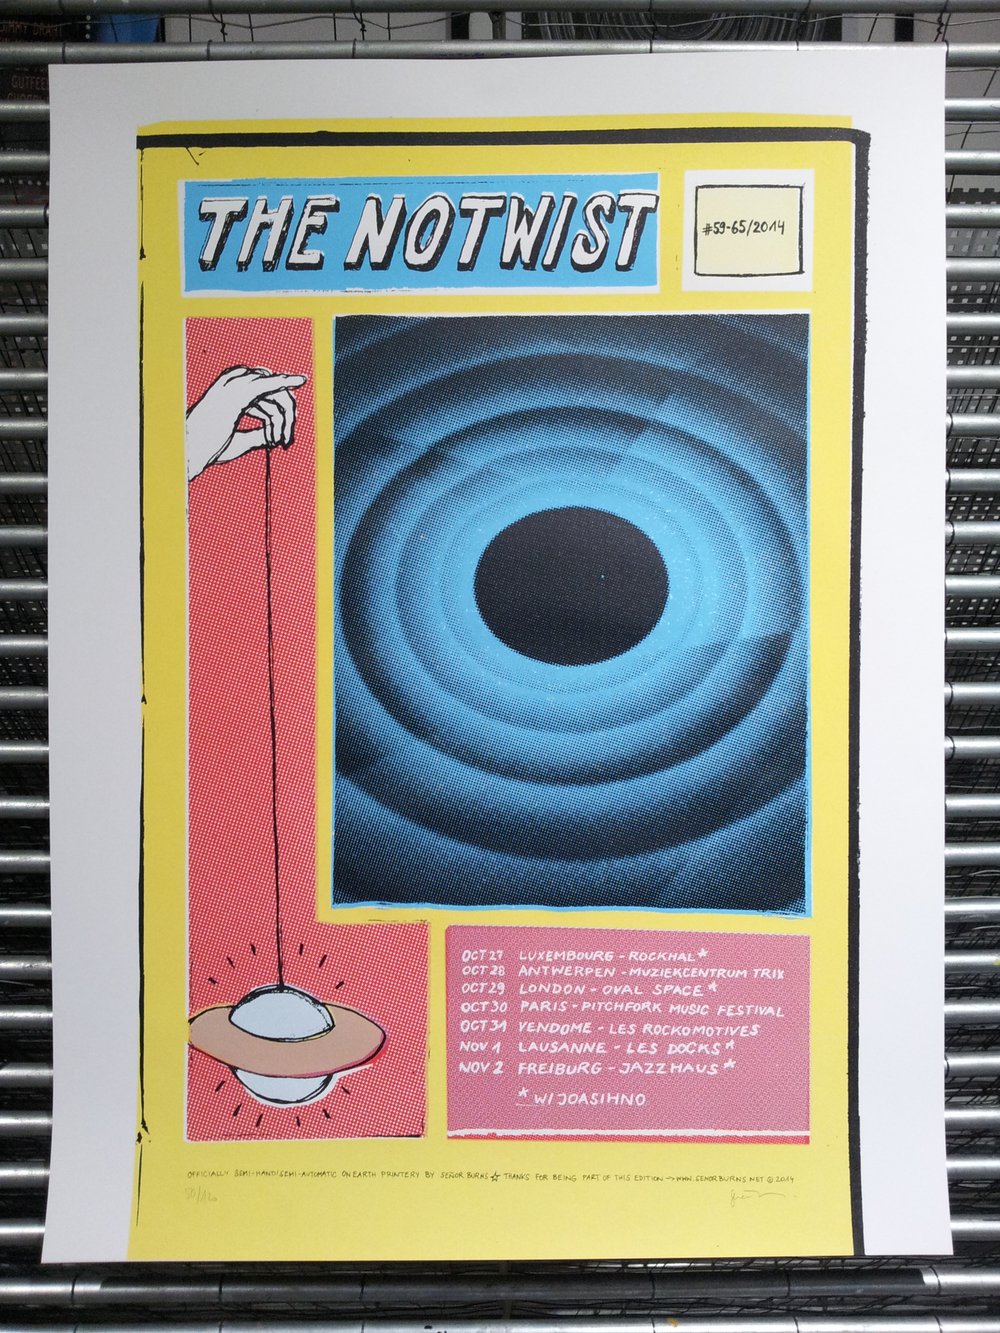 THE NOTWIST (#59-65/2014)